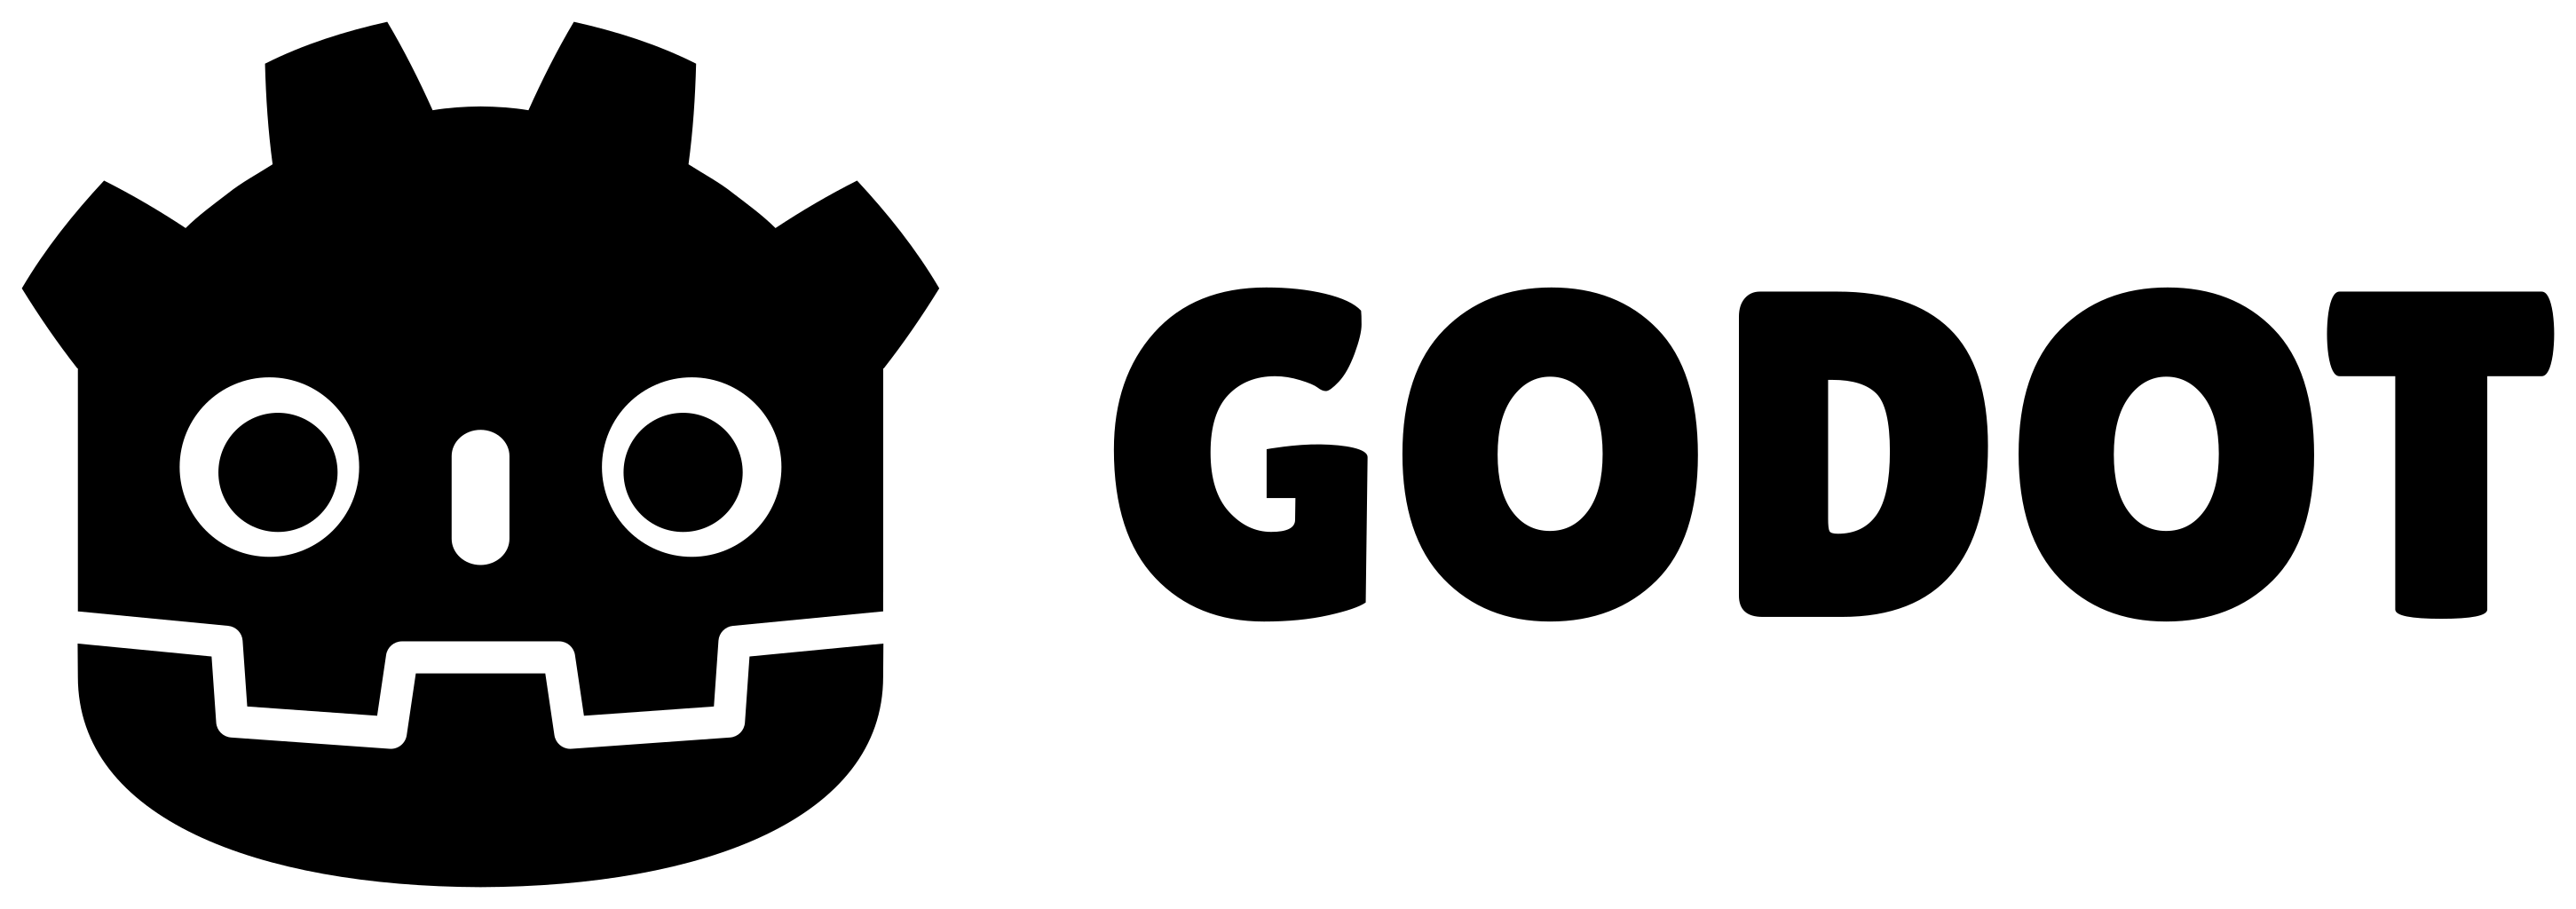 Godot Engine logo (monochrome for light backgrounds)